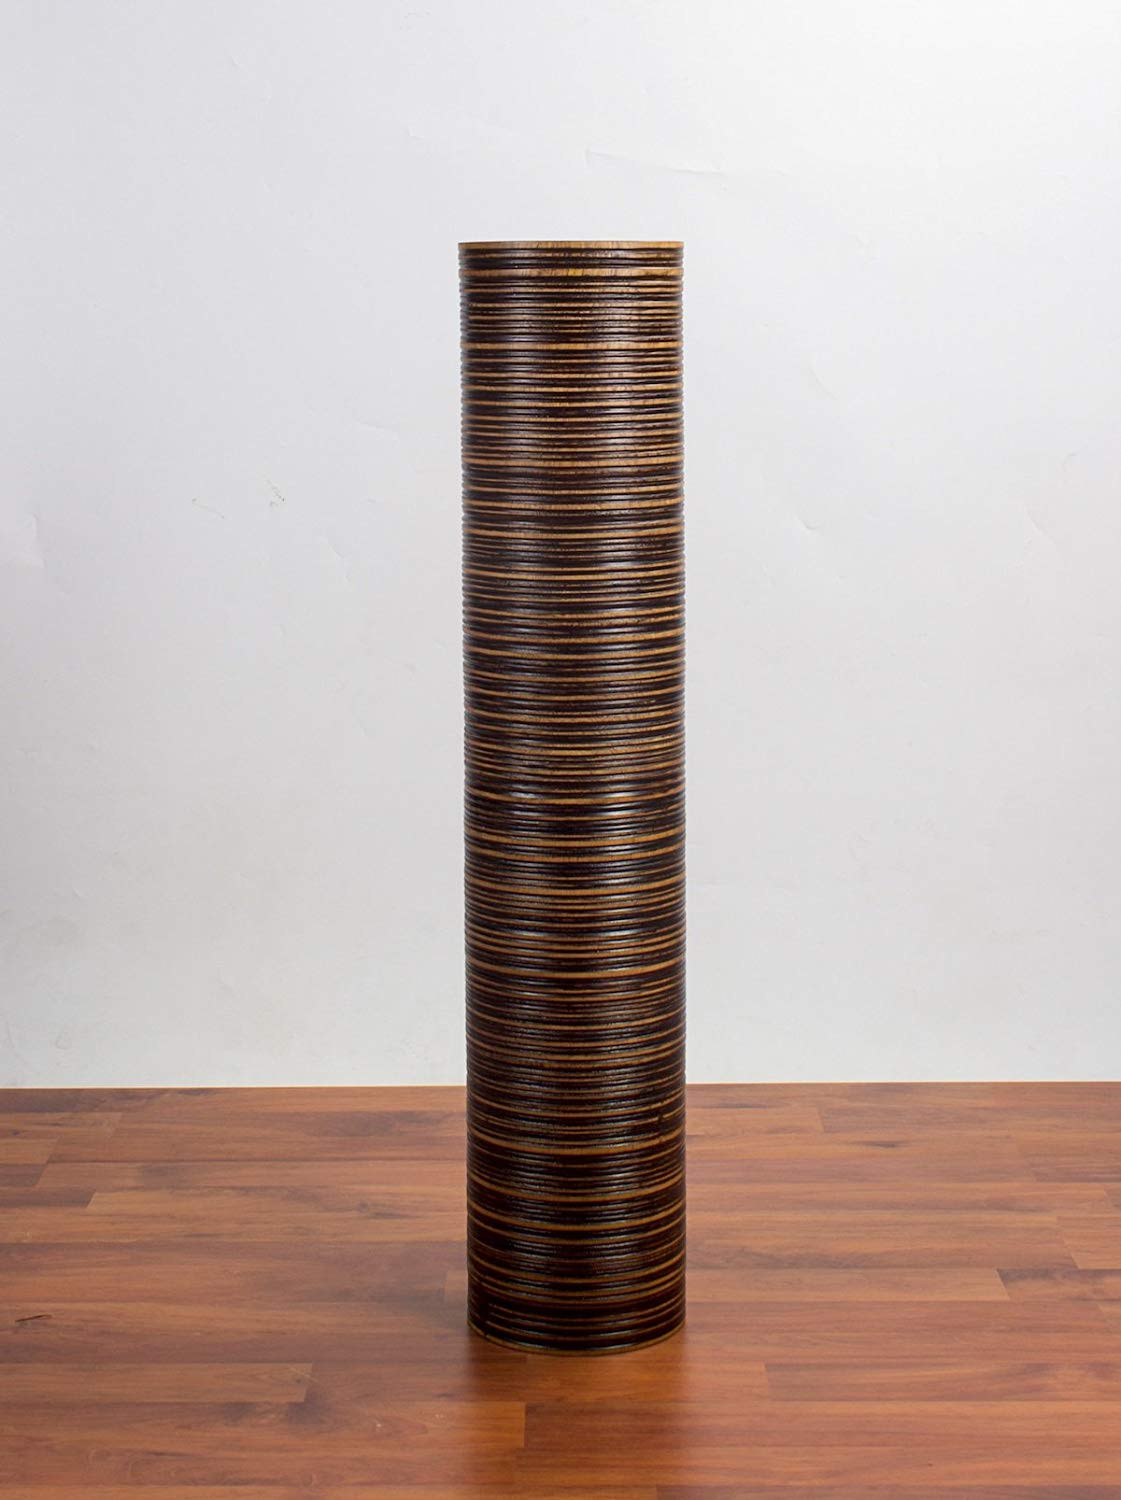 26 Wonderful Spun Bamboo Vase 2022 free download spun bamboo vase of amazon com tall floor vase 30 inches wood brown home kitchen in 71ywhr0whul sl1500